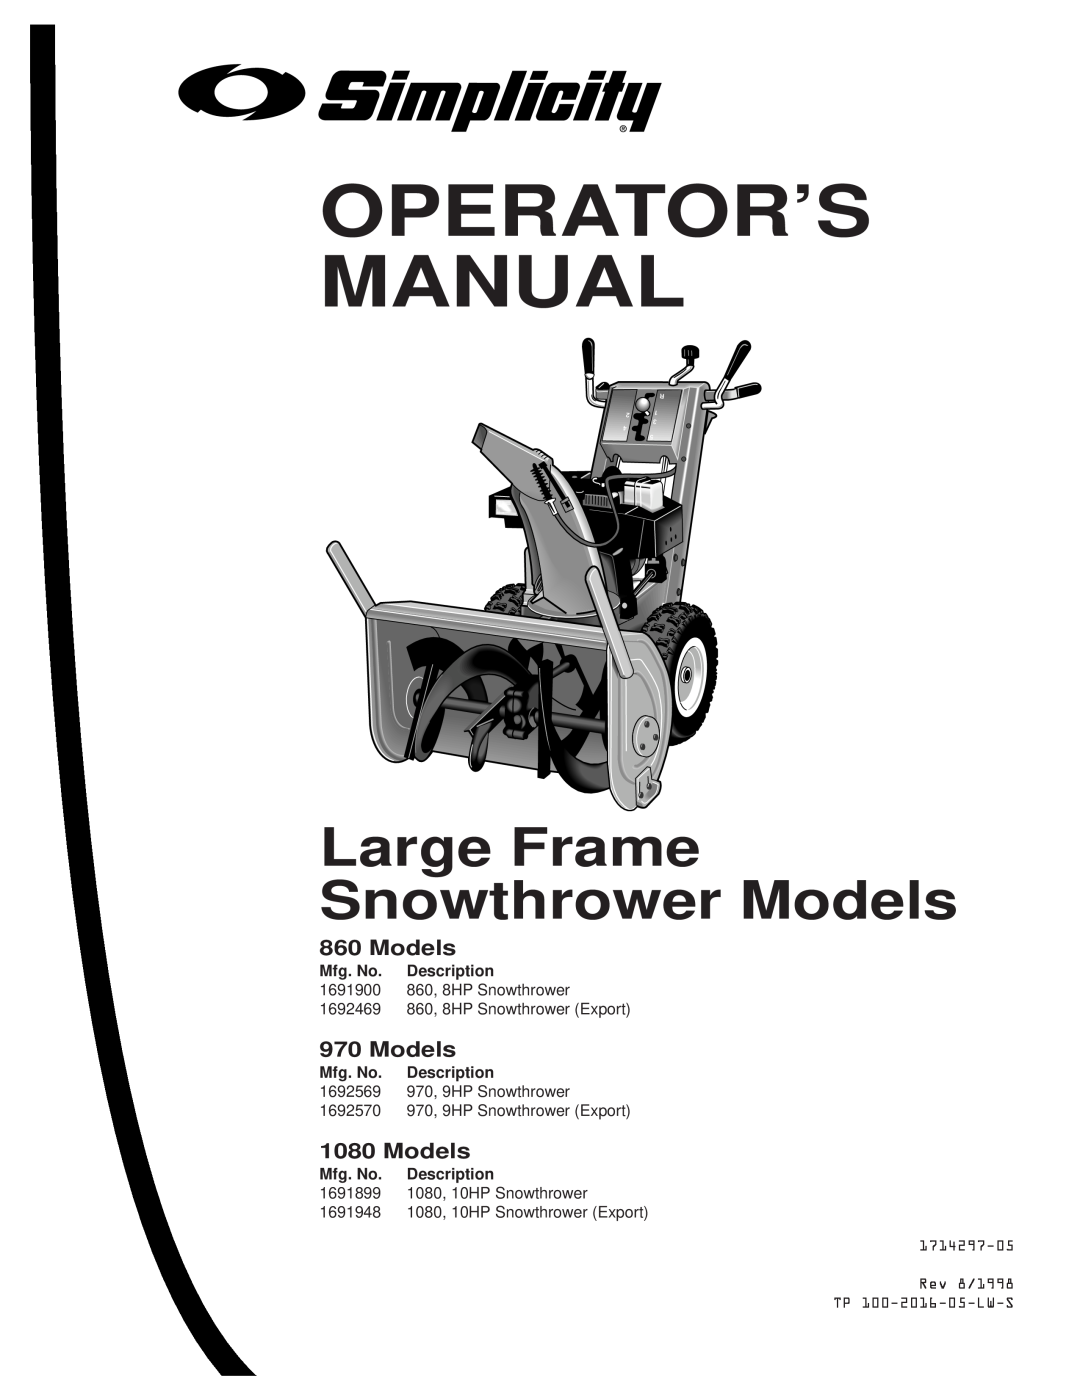 Simplicity 1691948, 1692469, 1692570 manual Operator’S Manual, Large Frame Snowthrower Models, Rev 8/1998 TP 100-2016-05-LW-S 